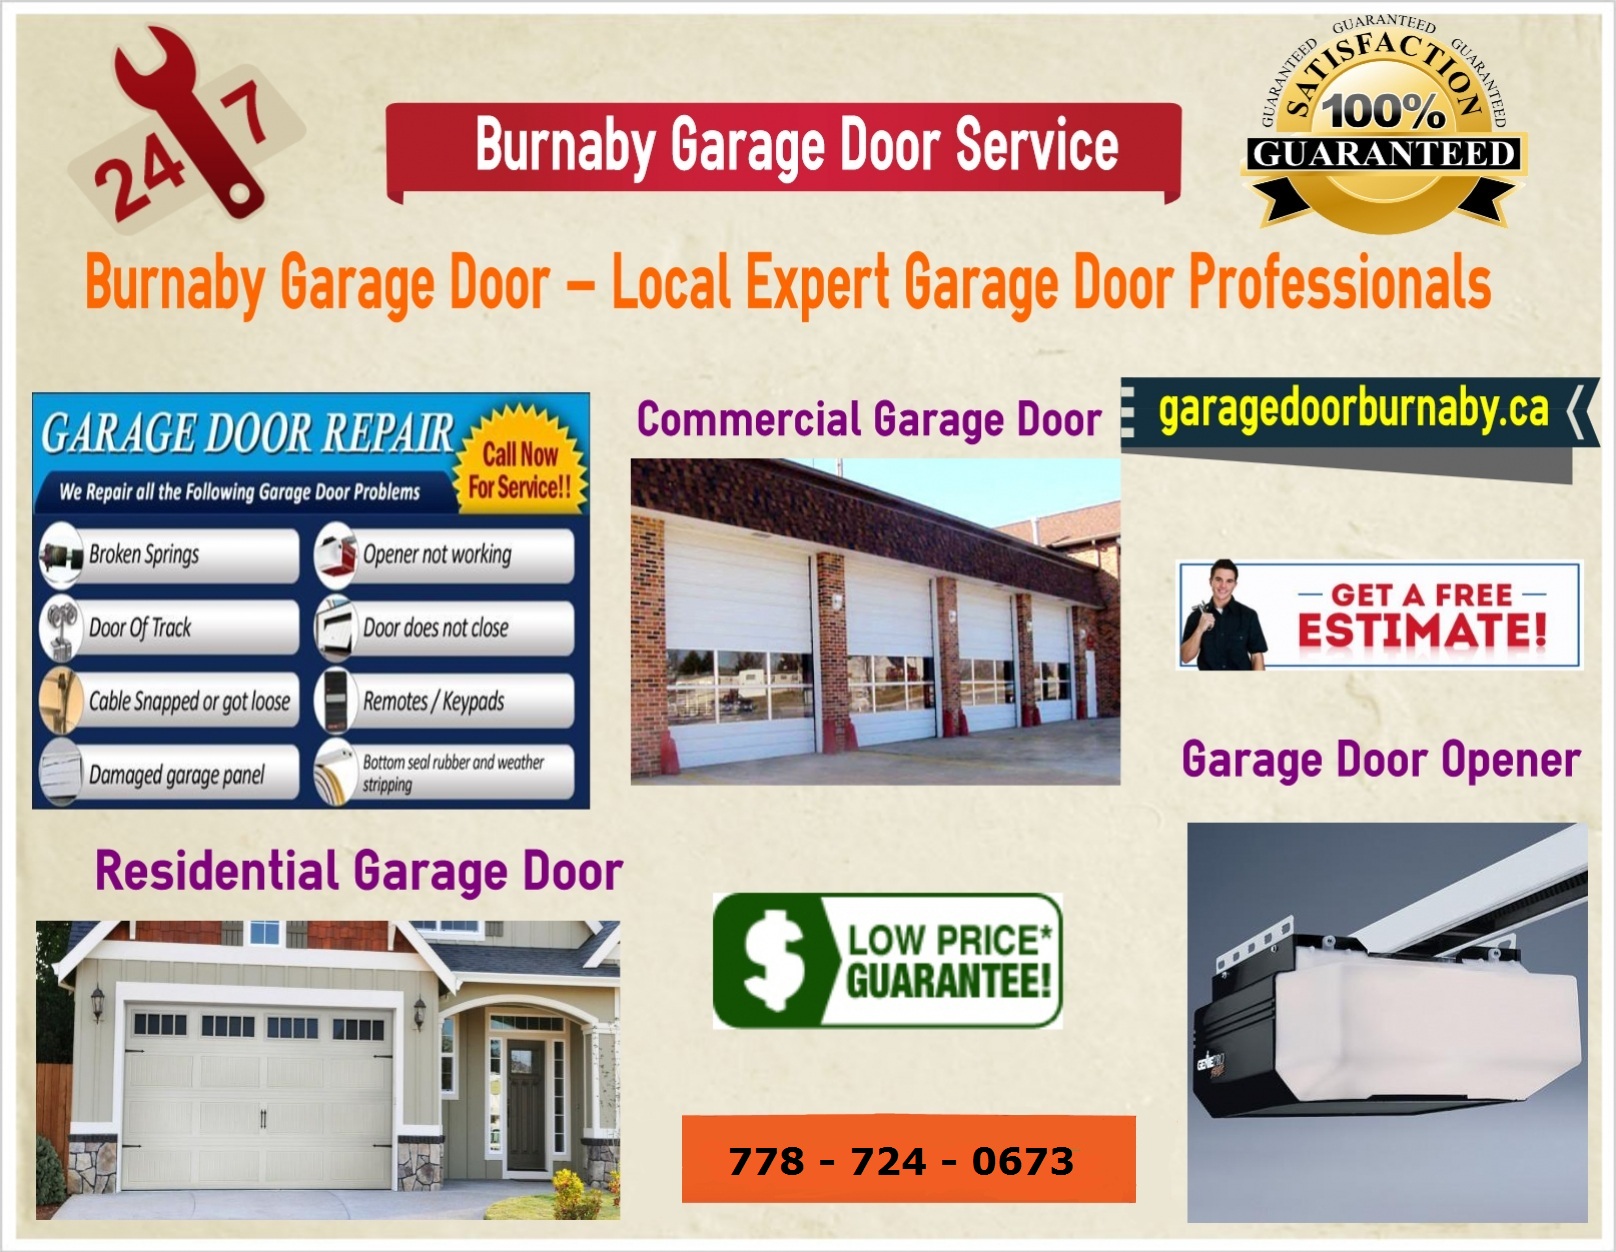 Garage Door Repair Burnaby | Free Images at Clker.com - vector clip art ...